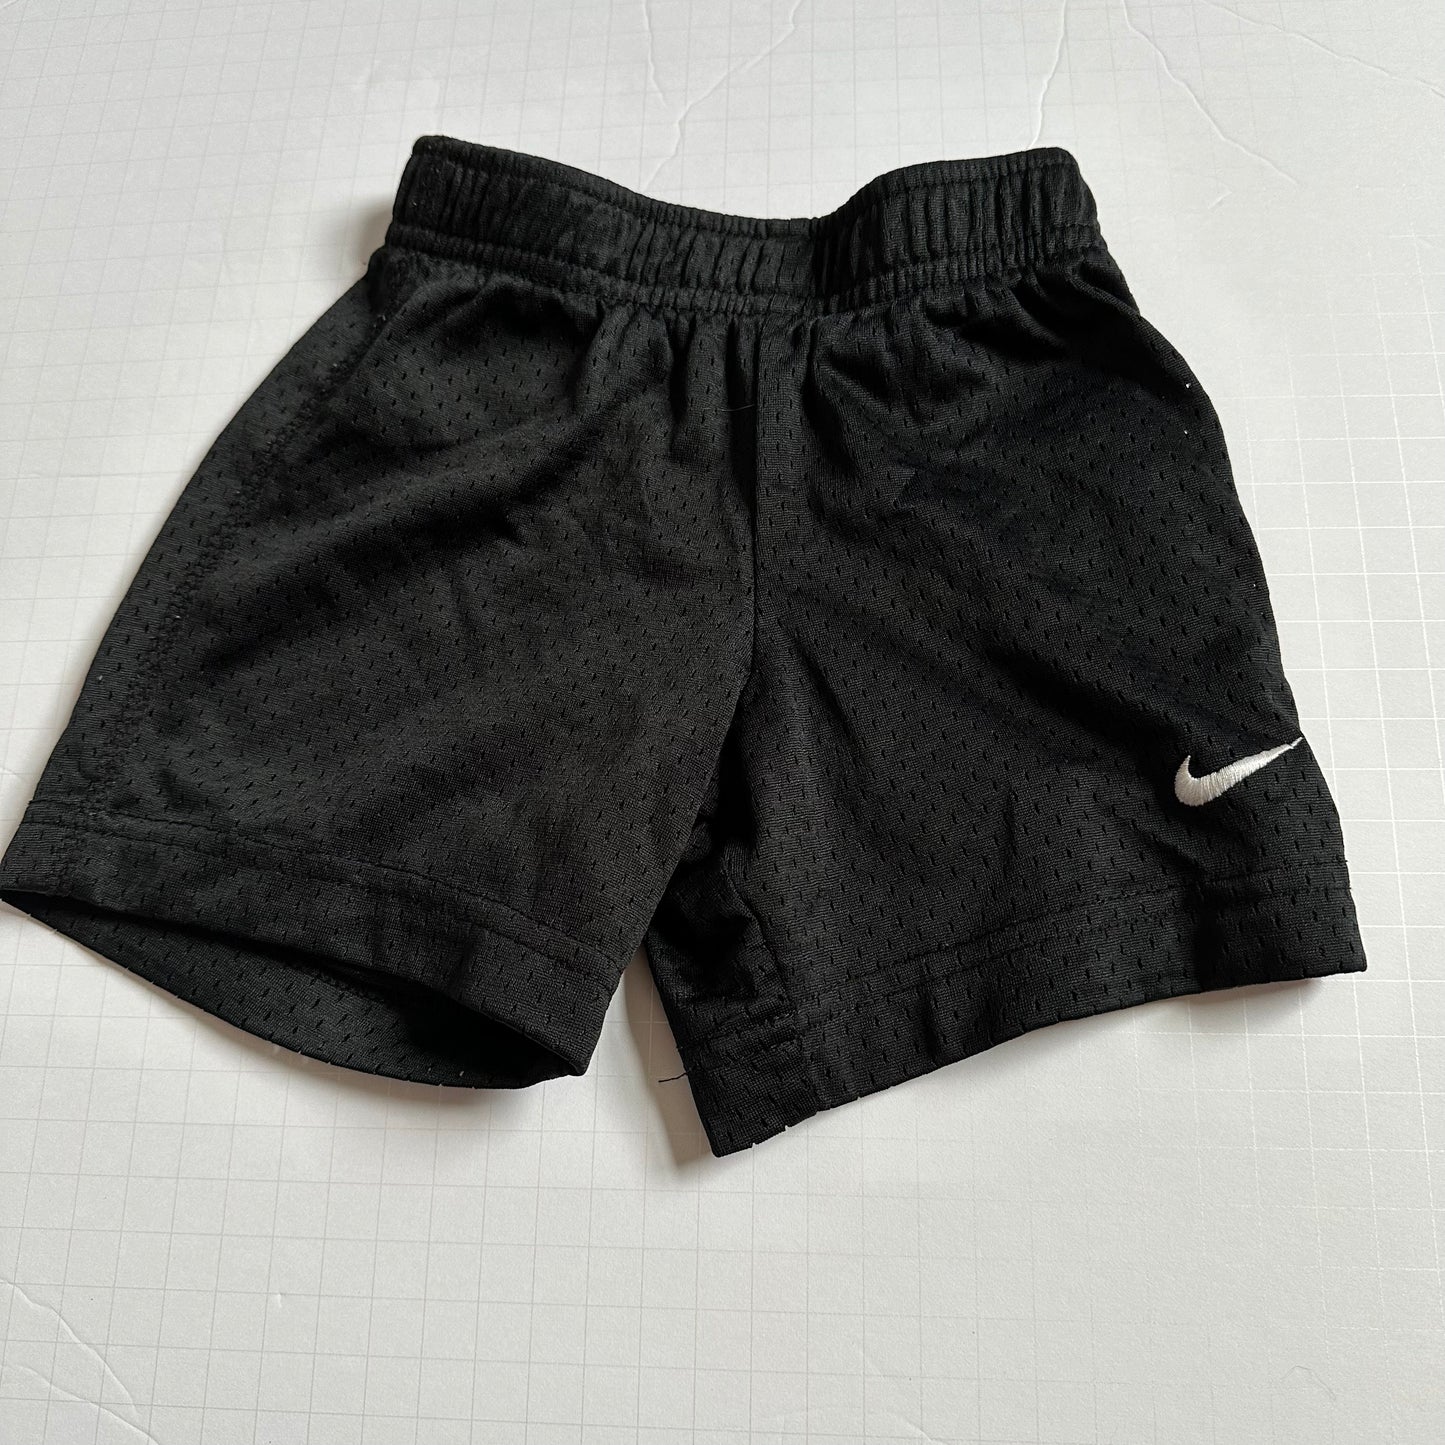 18M Black Nike shorts